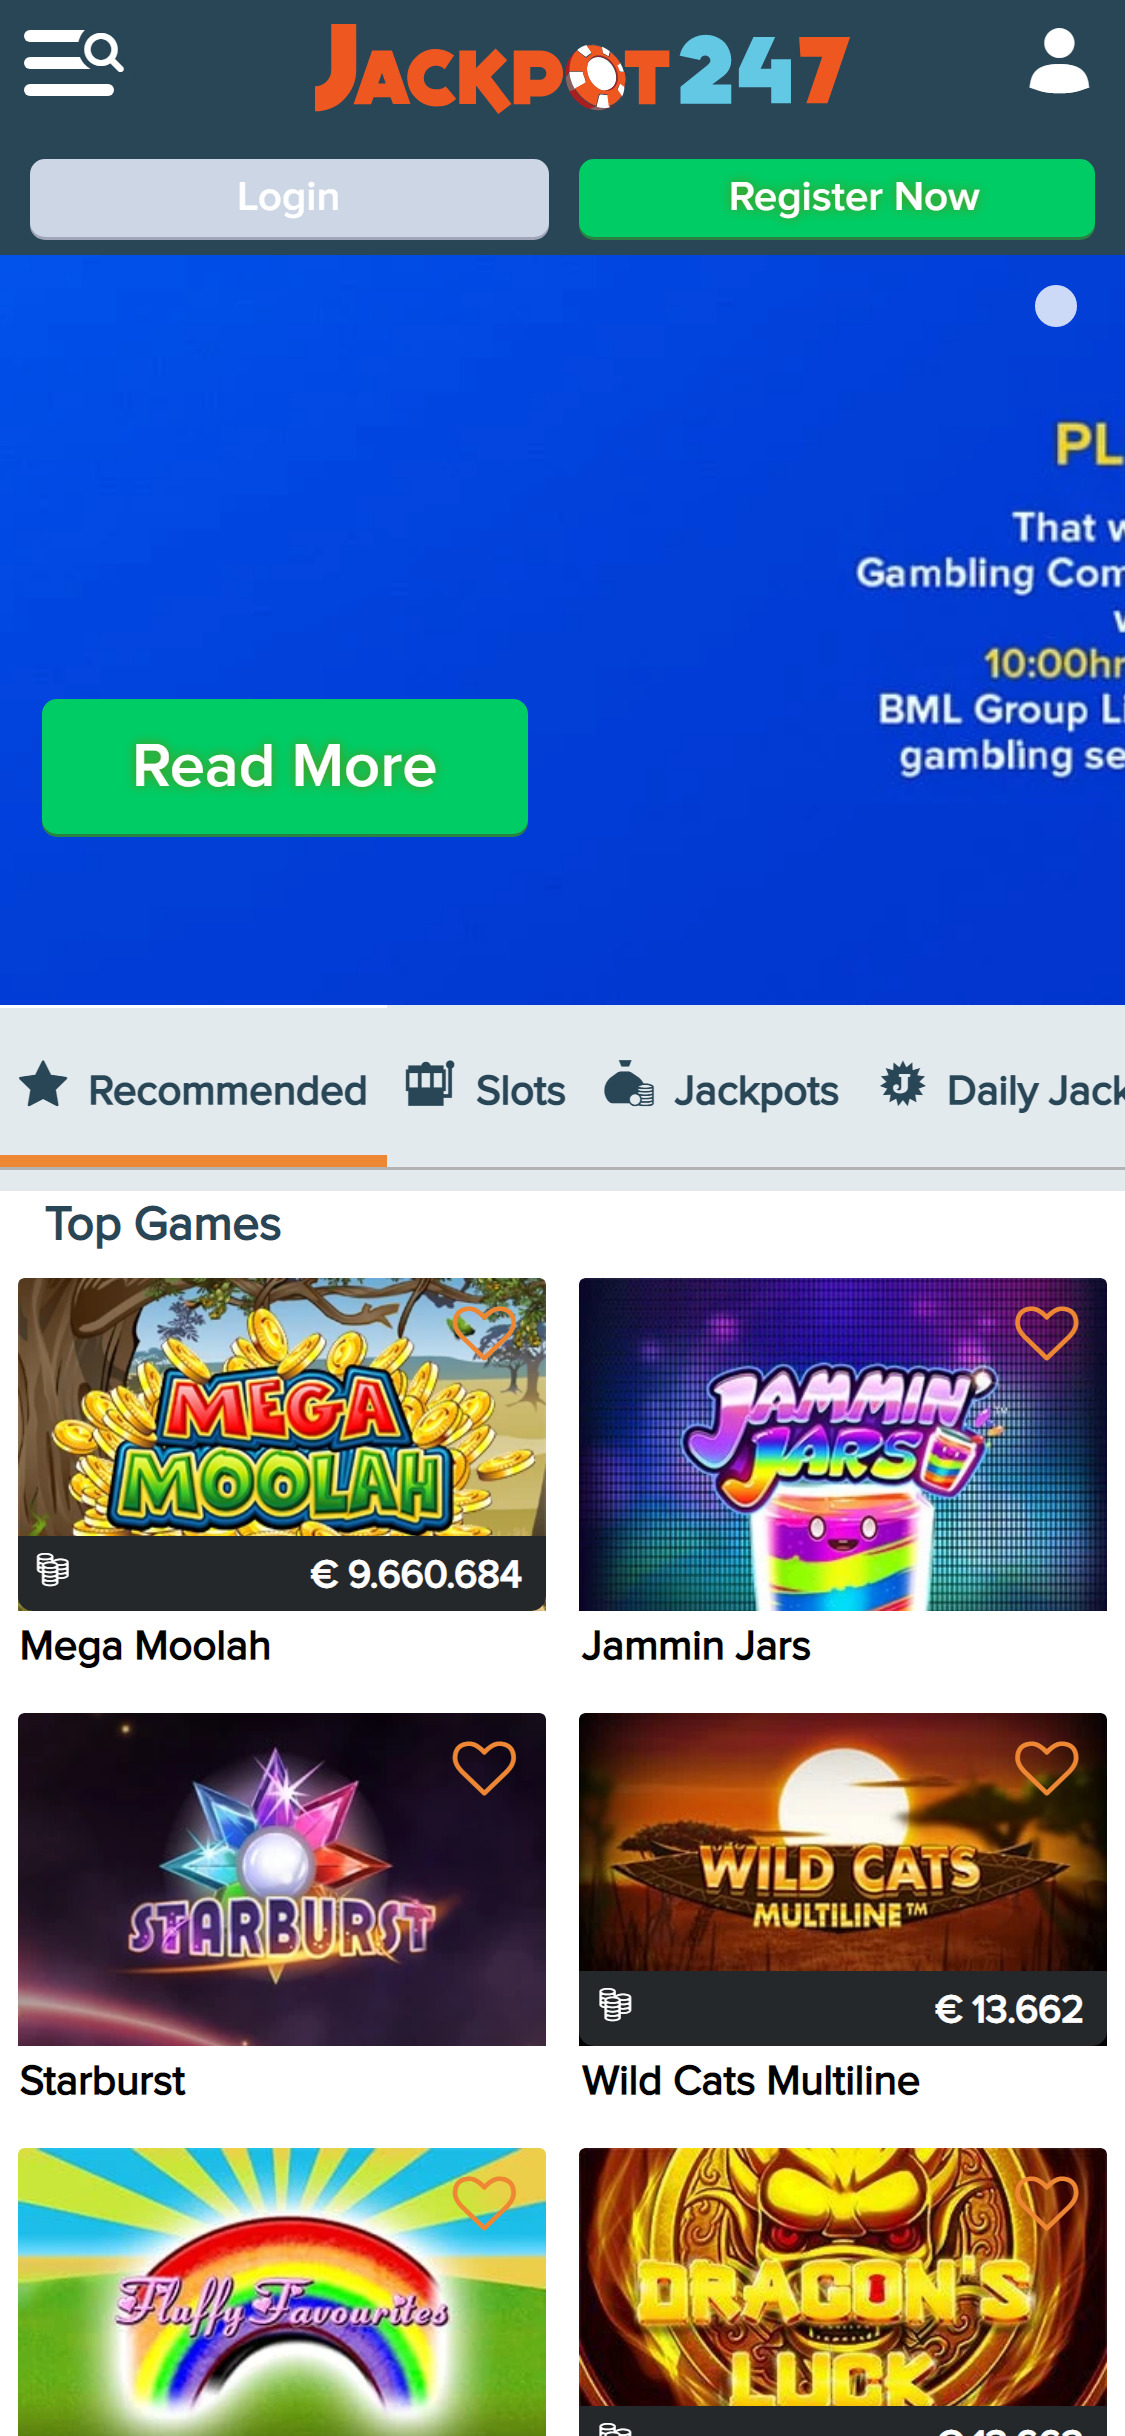 Jackpot247 Casino Mobile Login Review